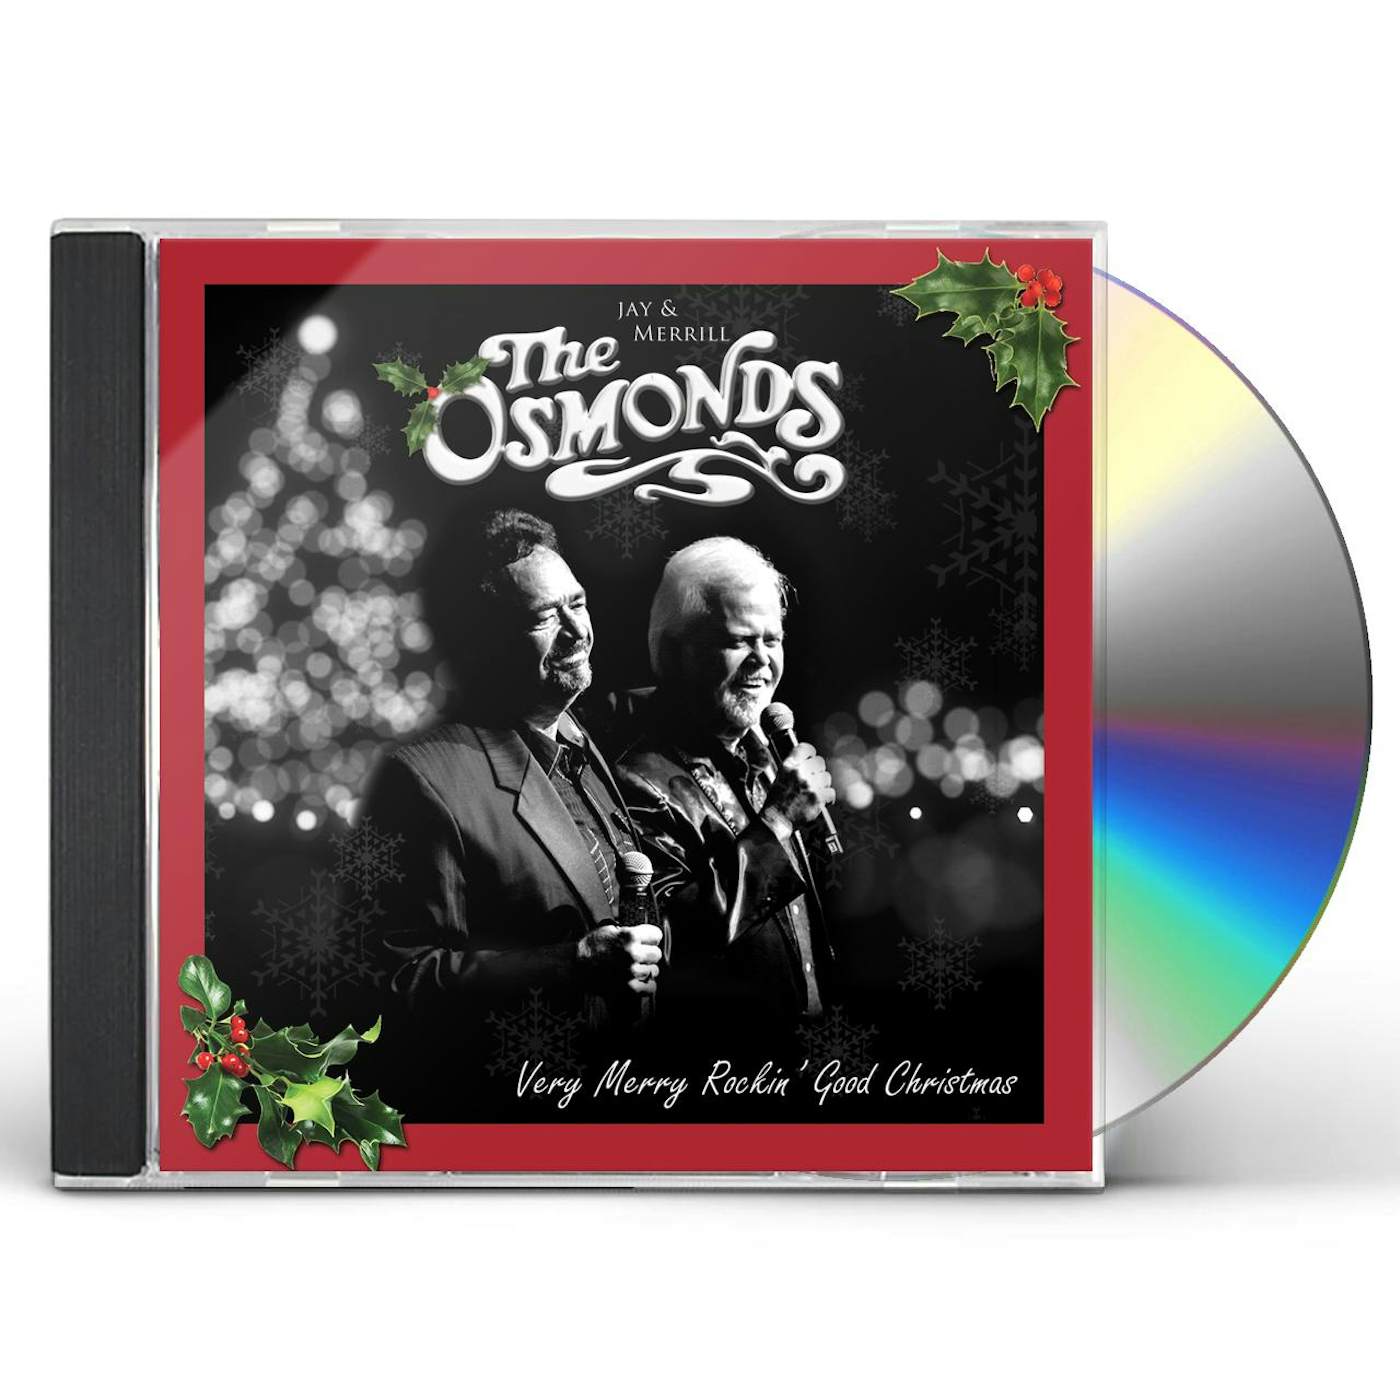 The Osmonds VERY MERRY ROCKIN' CHRISTMAS CD